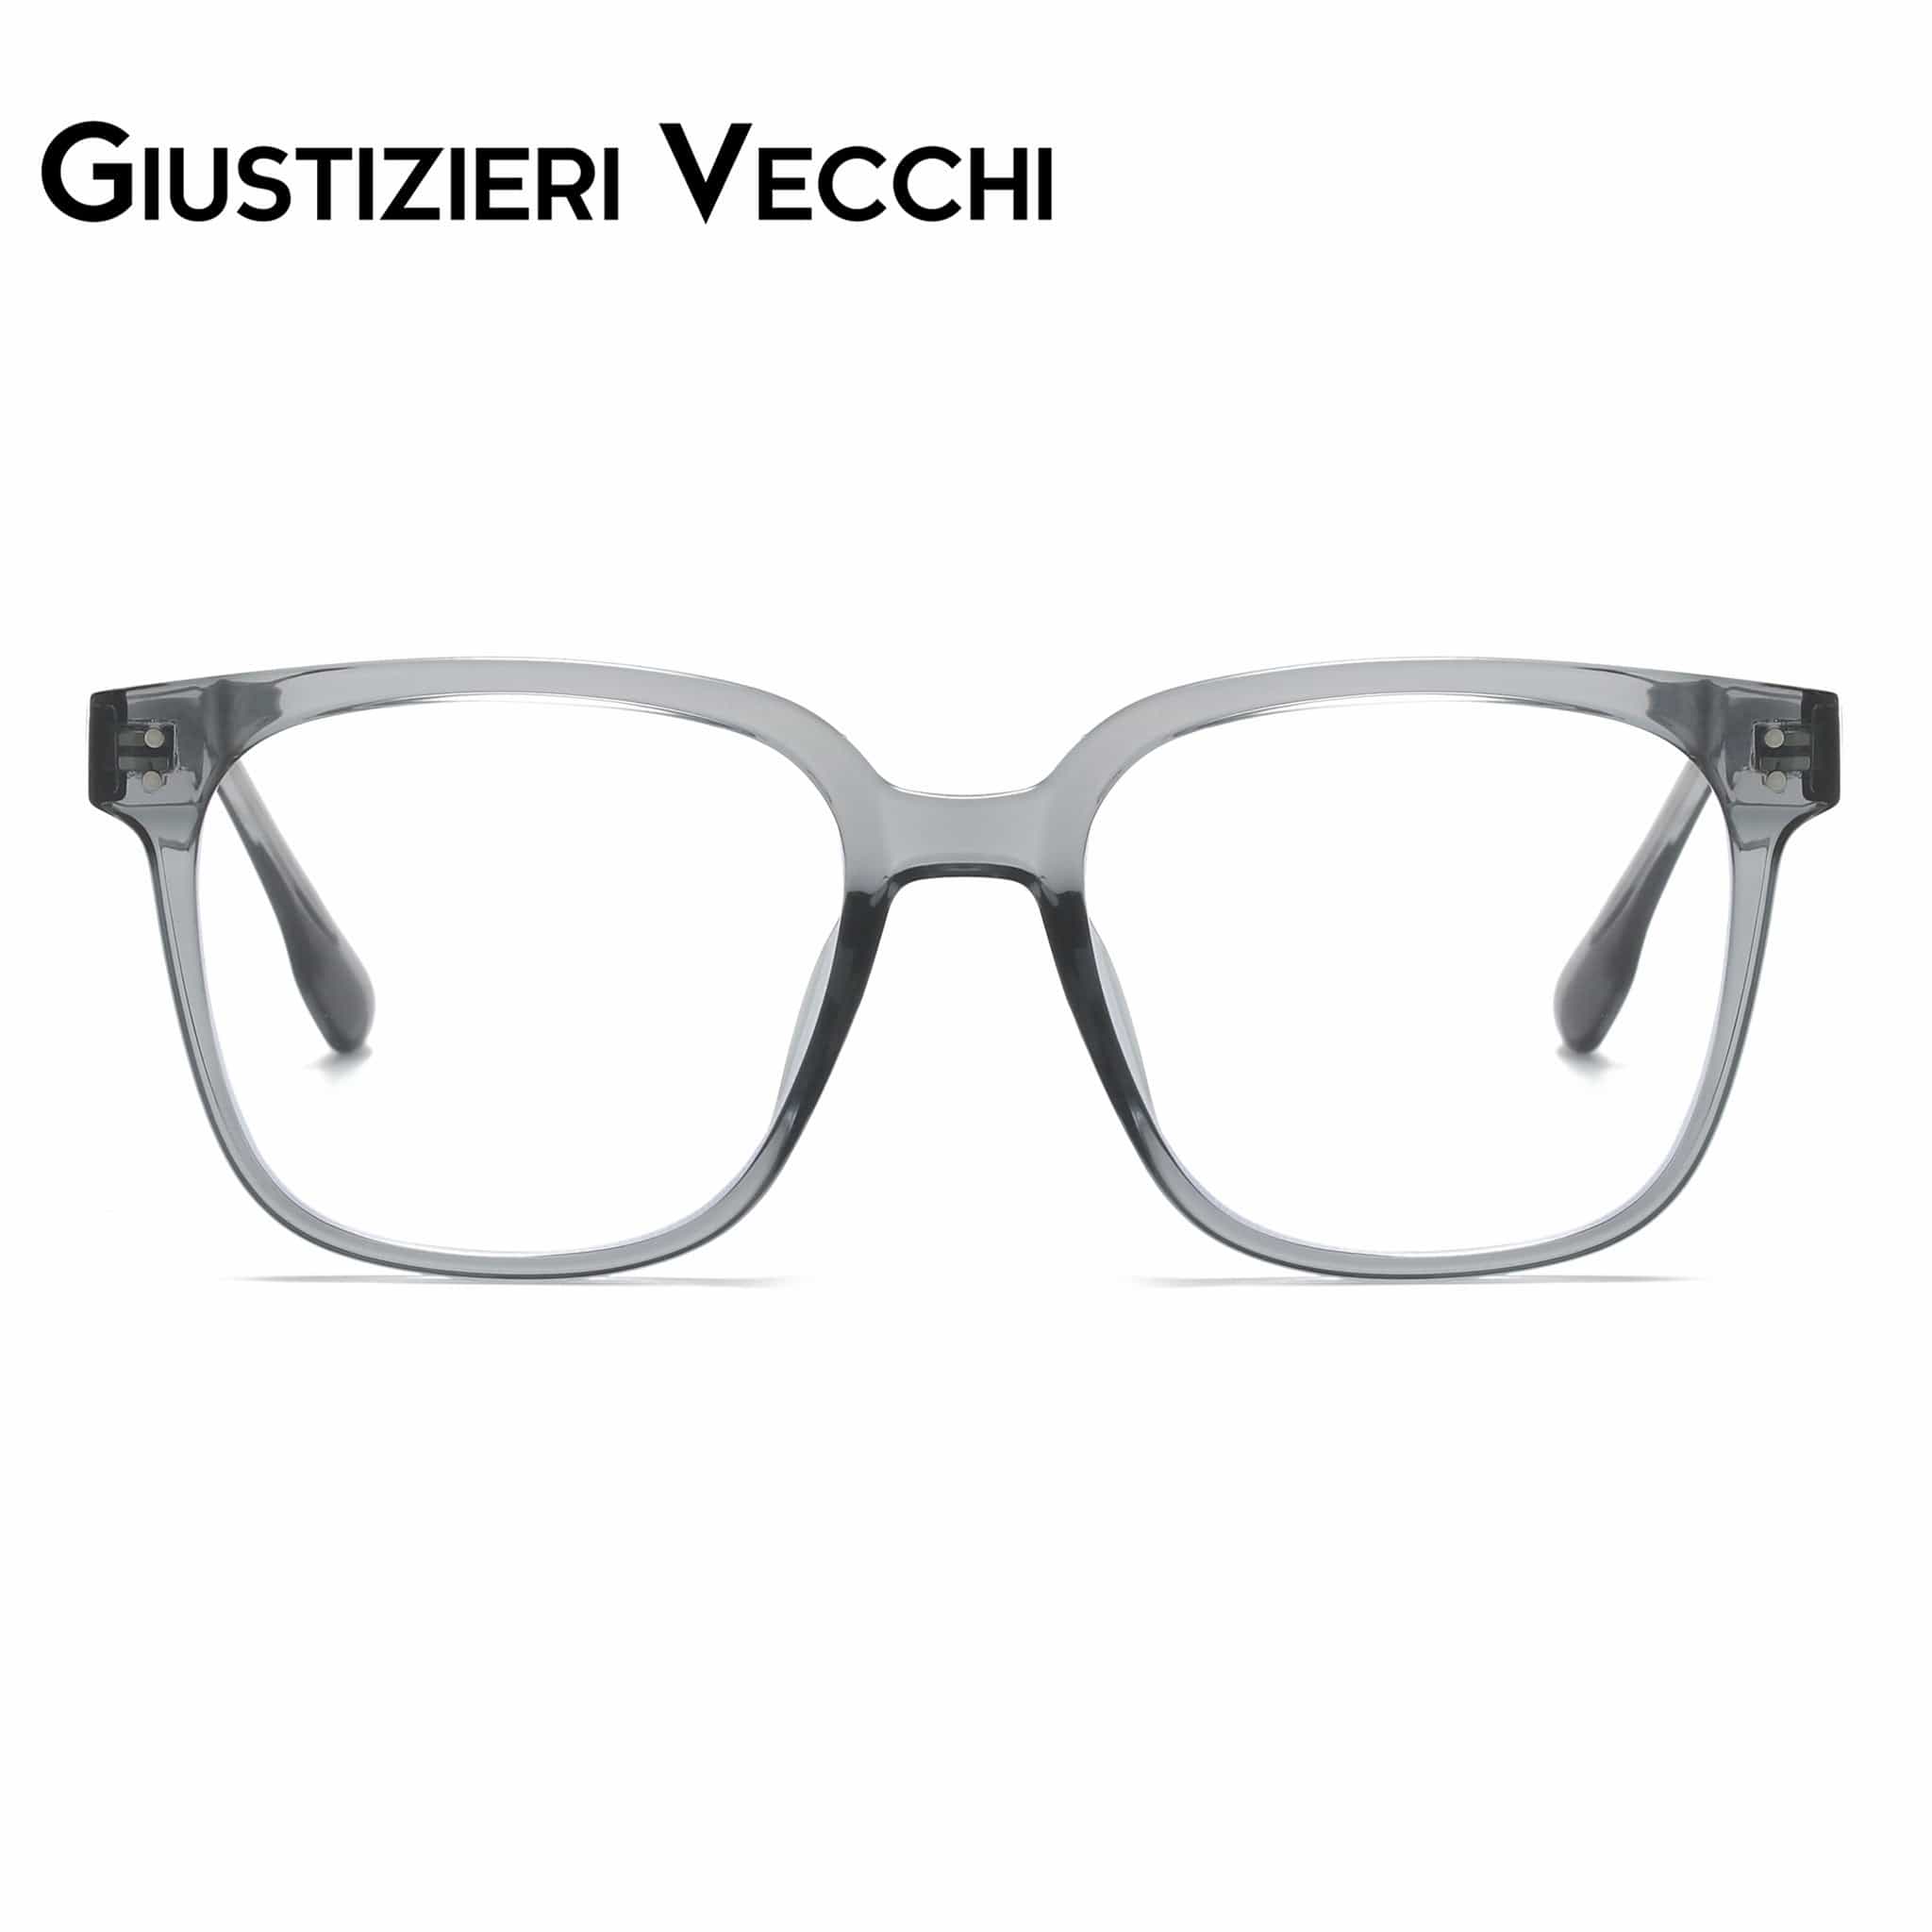 GIUSTIZIERI VECCHI Eyeglasses Medium / Sea Glass Grey Mystic Moon Duo